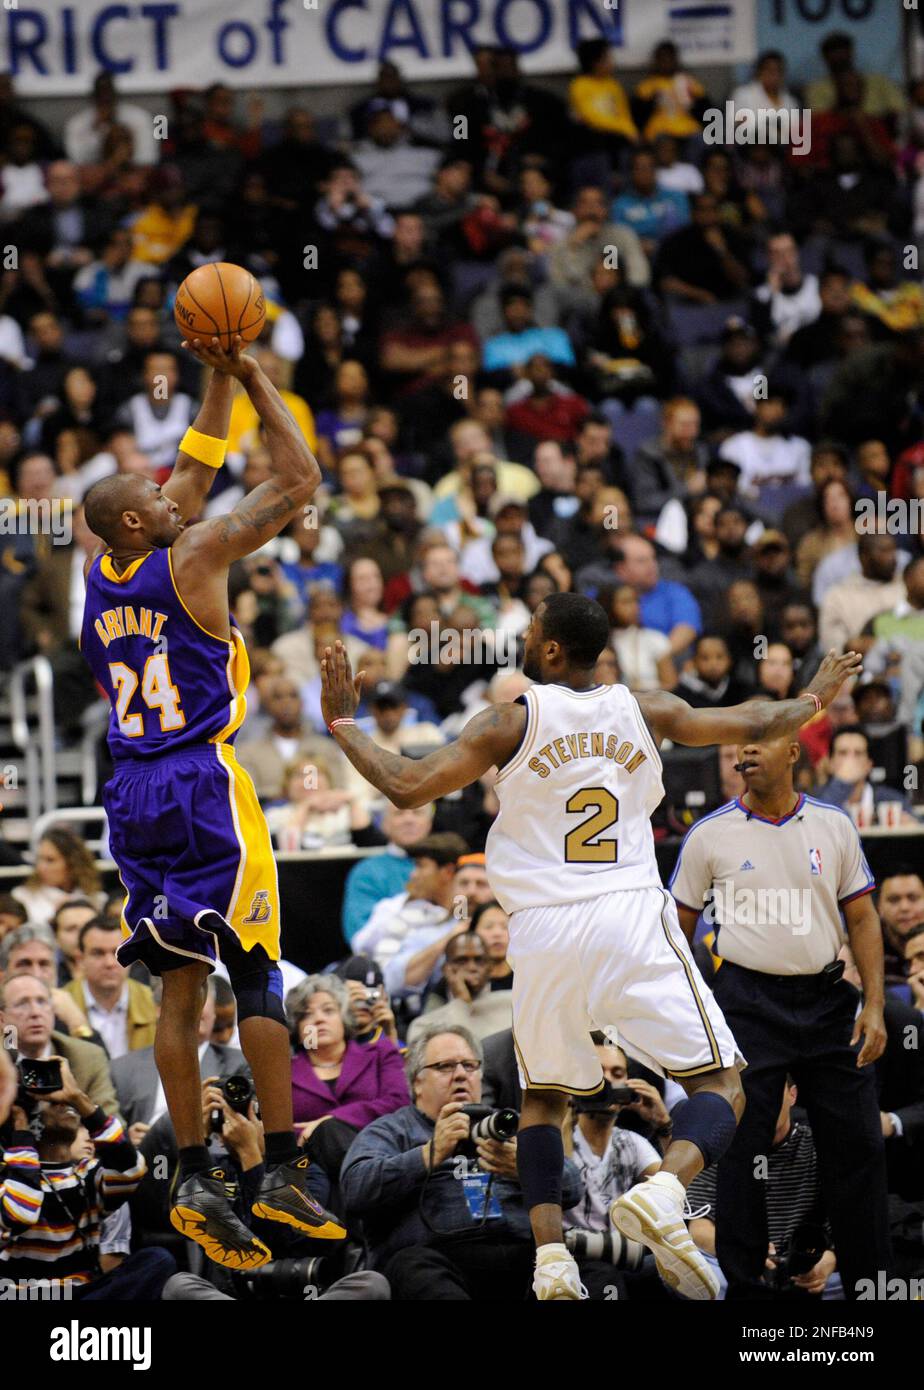 Photos: Wizards vs. Lakers // Dec. 4 Photo Gallery